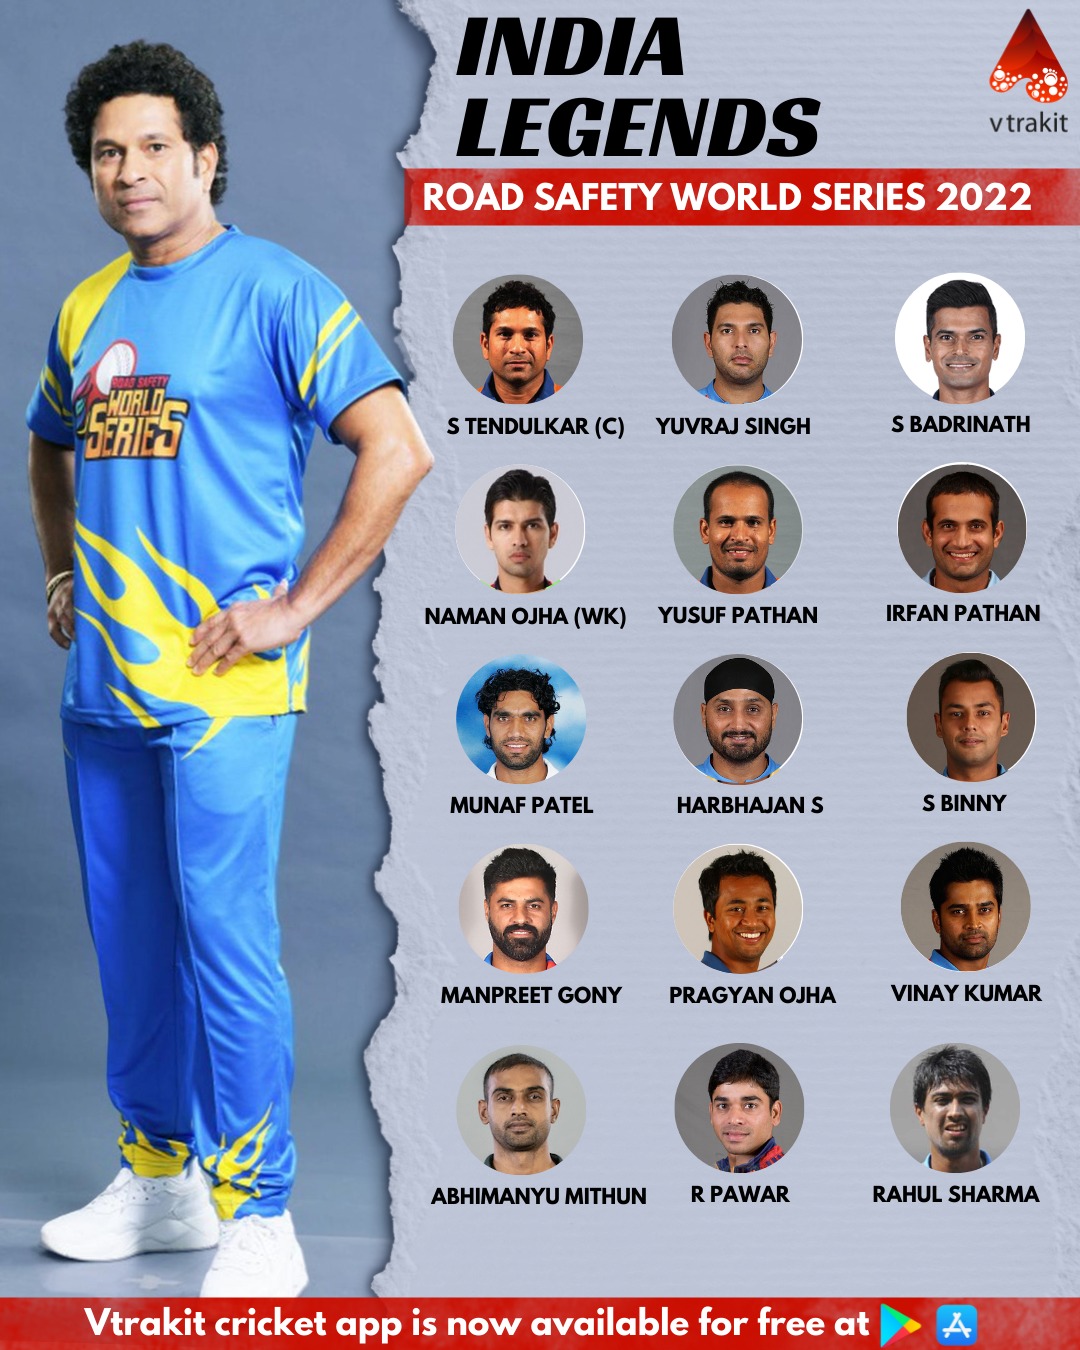 legends road safety world series